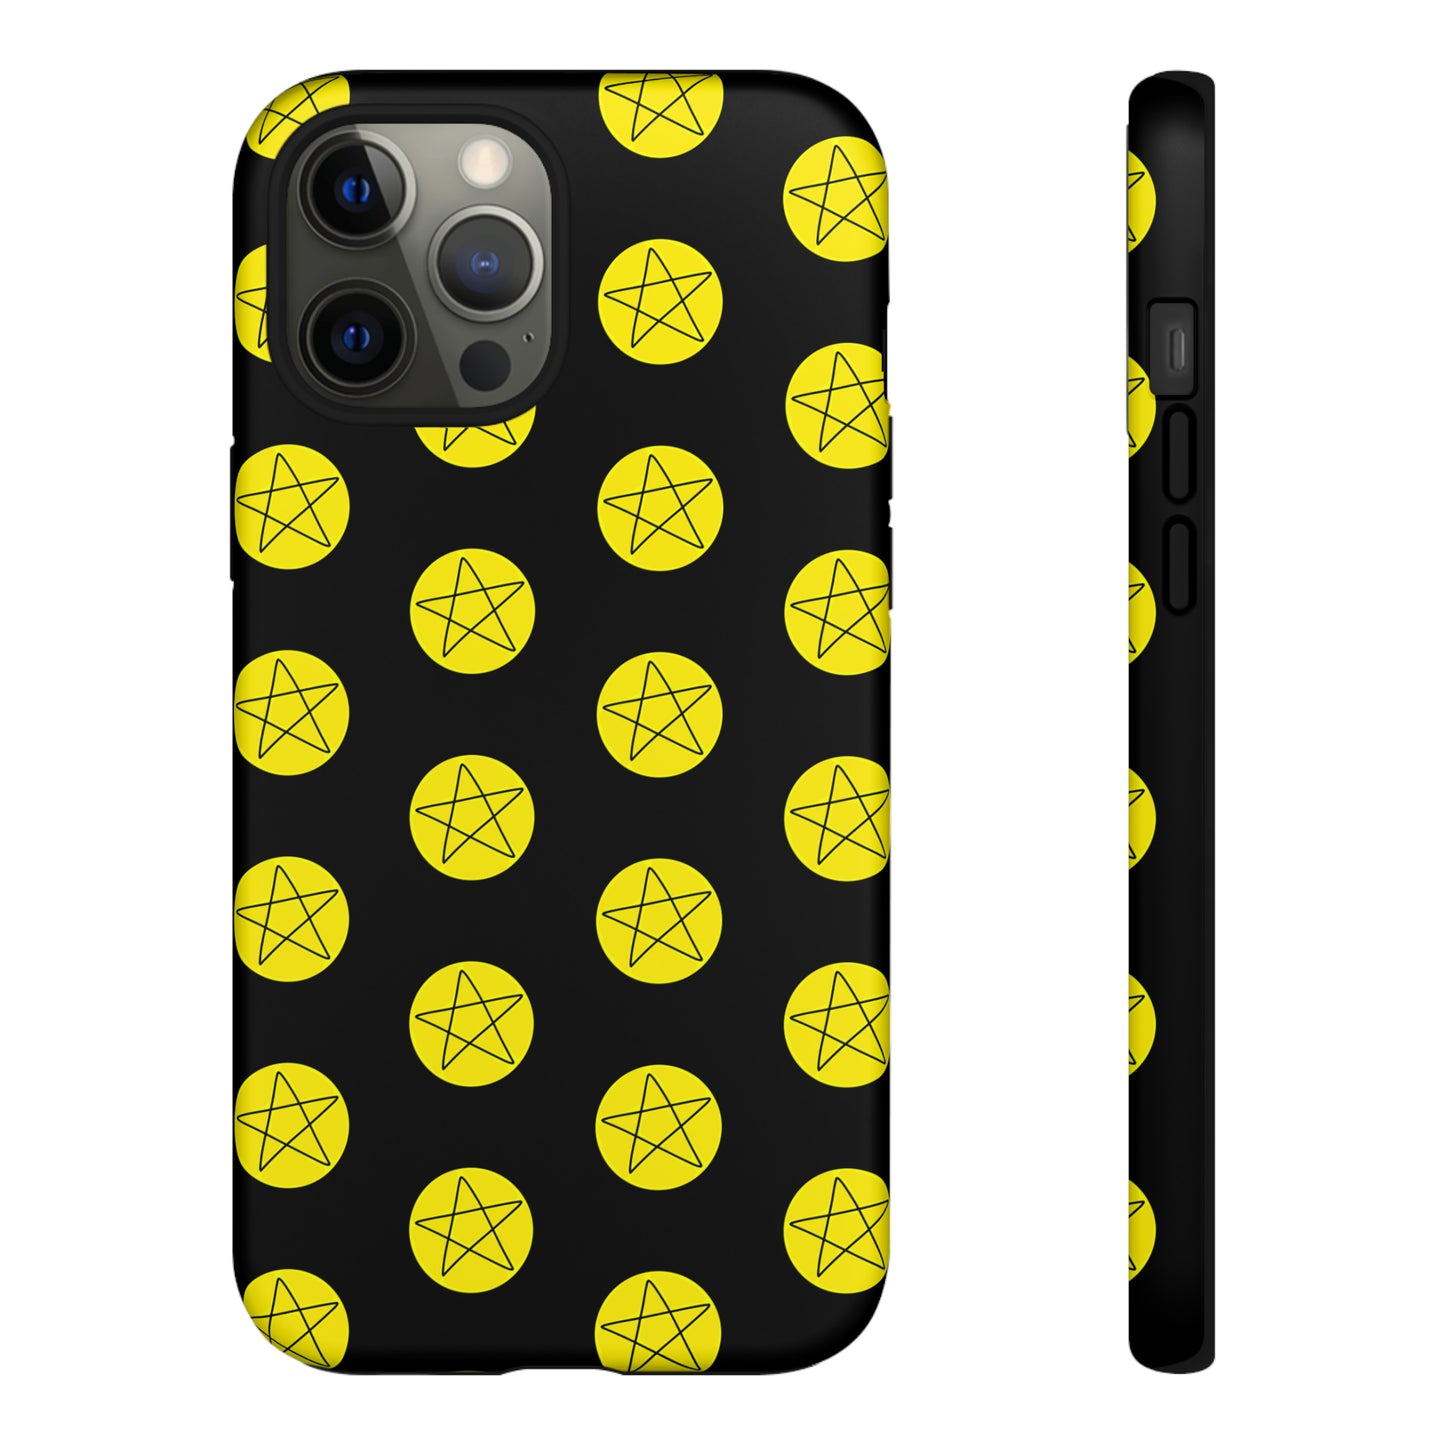 Tarot Phone Case - Suit of Pentacles